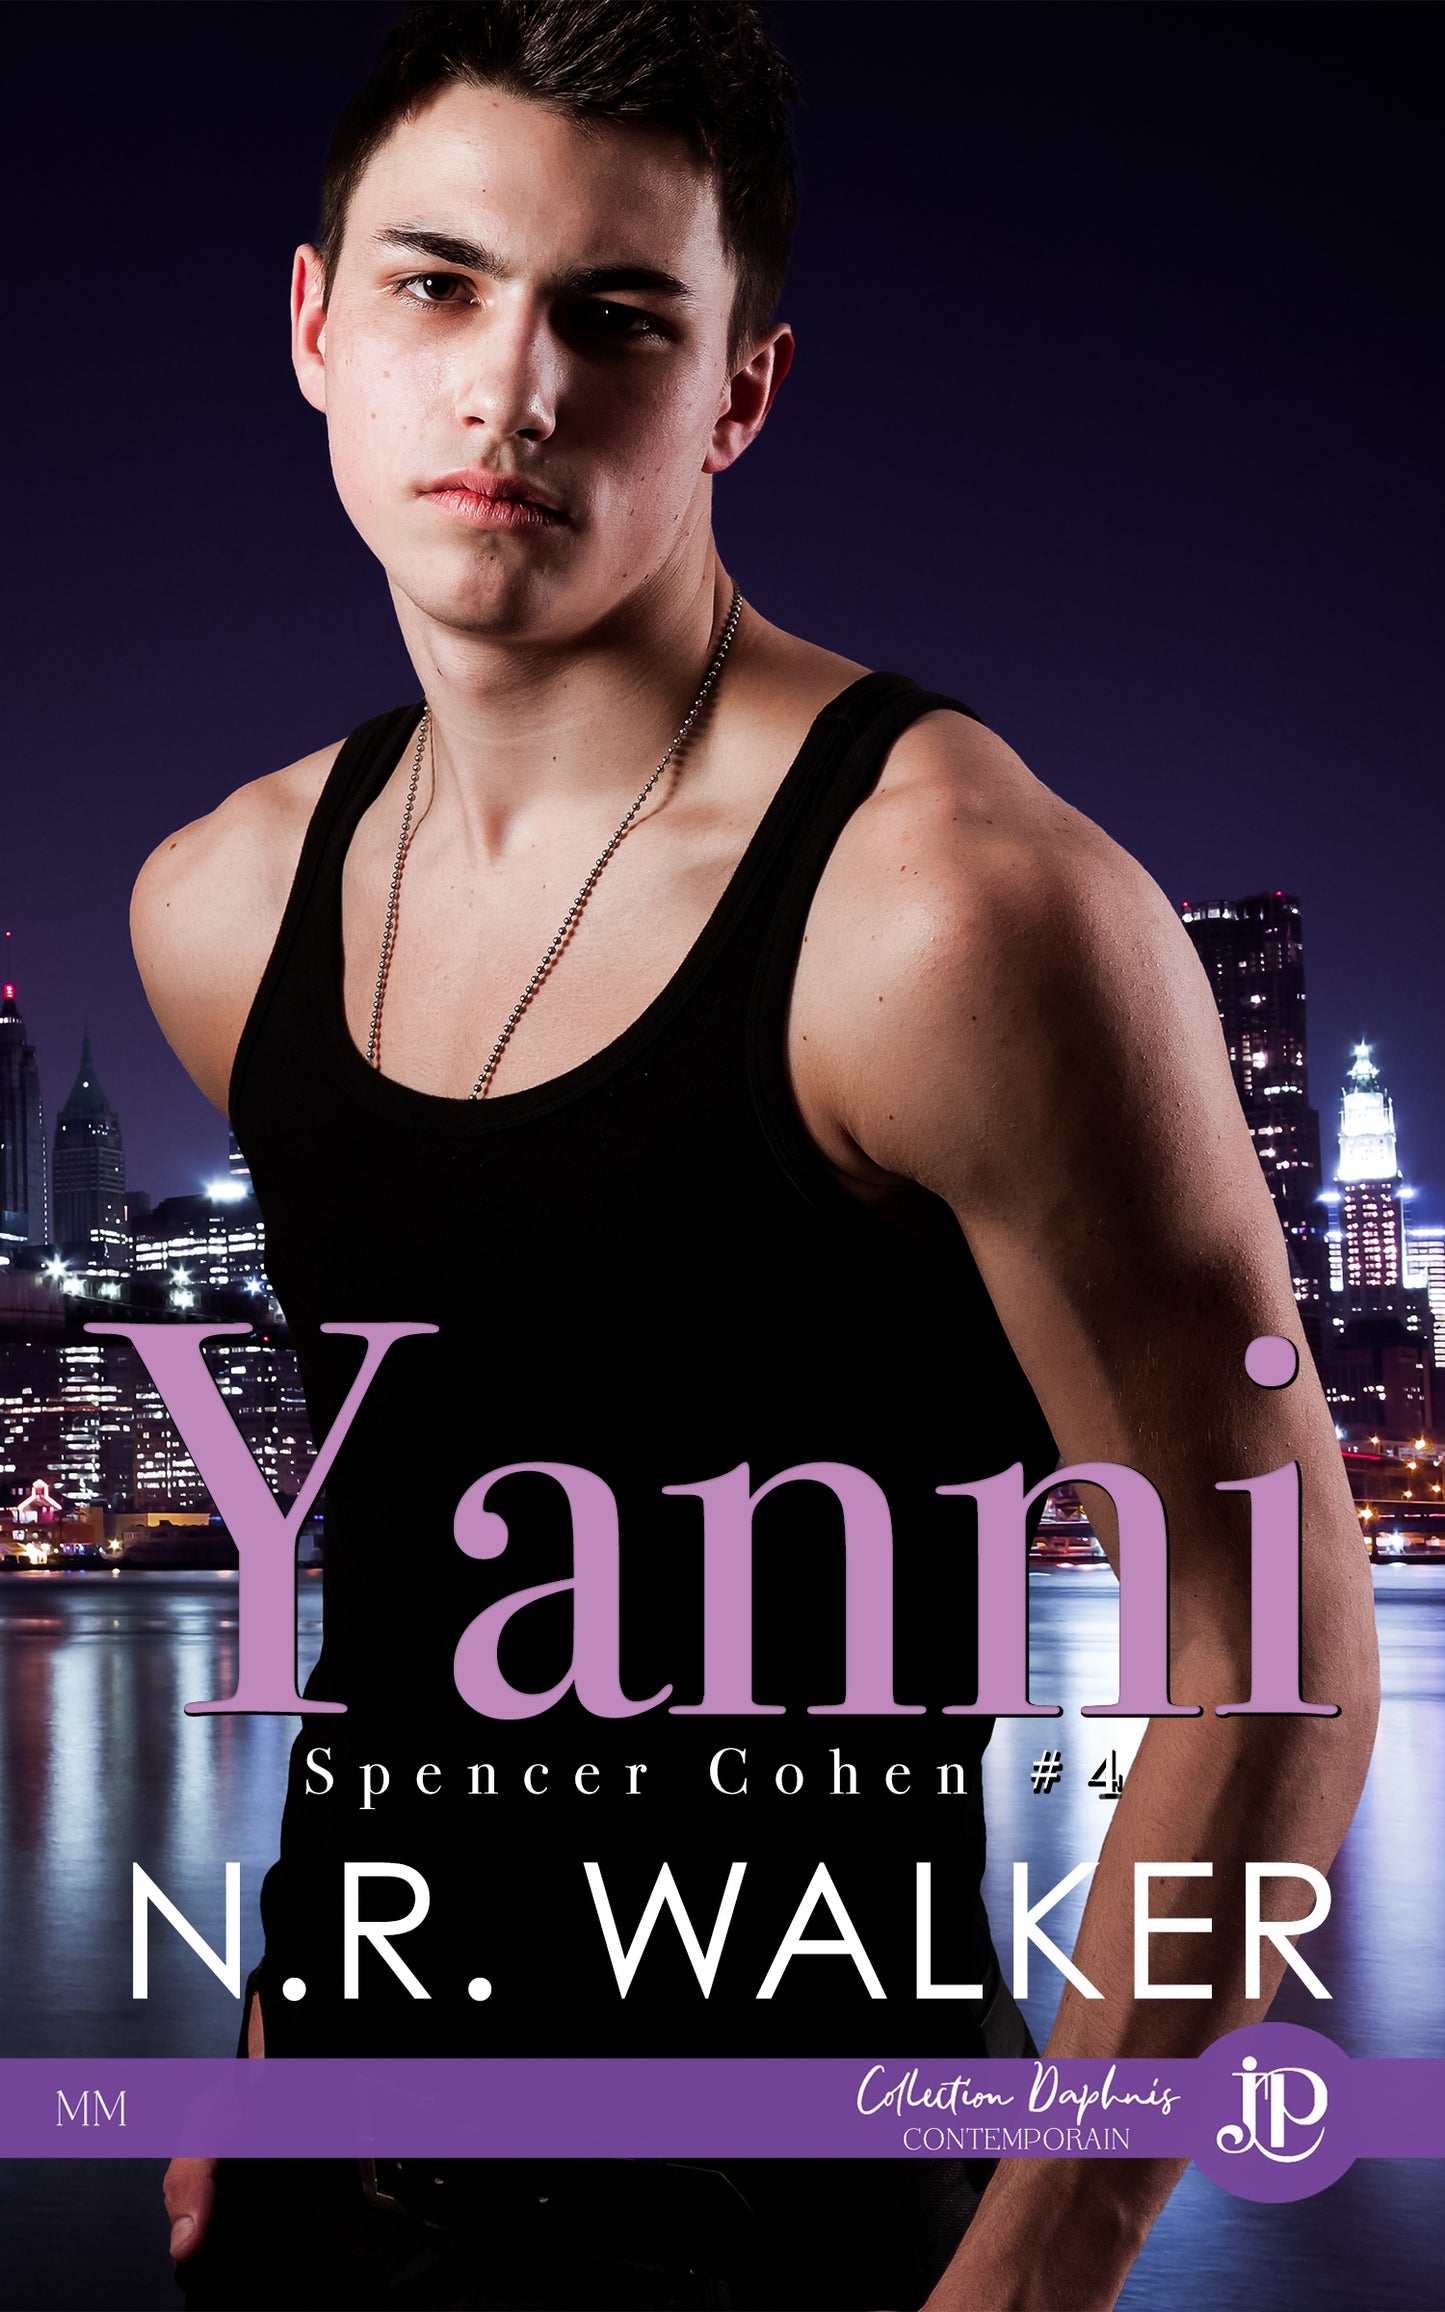 Spencer Cohen #4 : Yanni